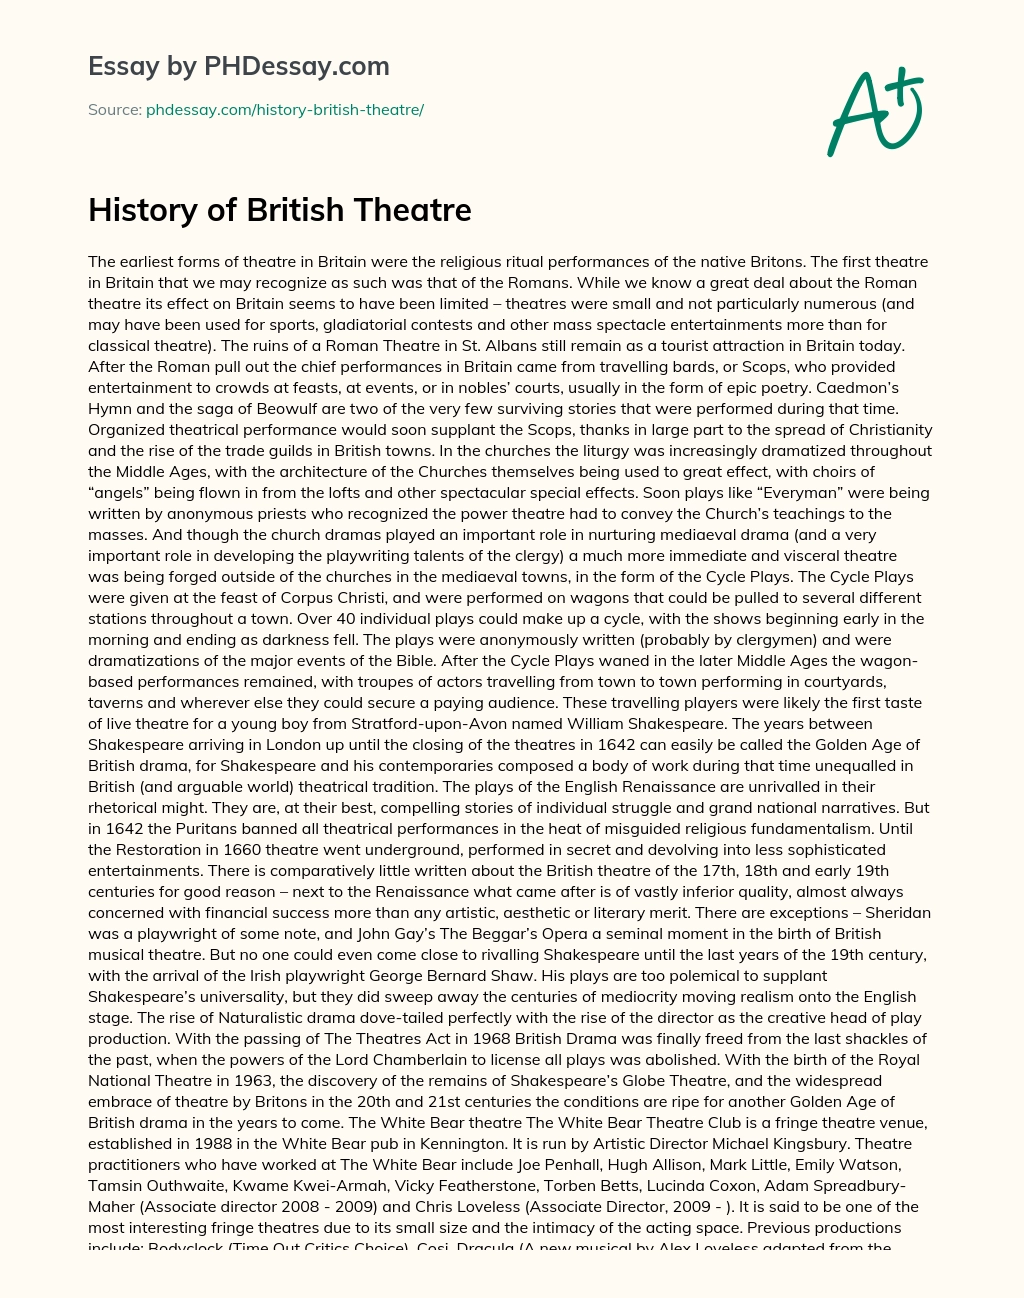 History of British Theatre essay